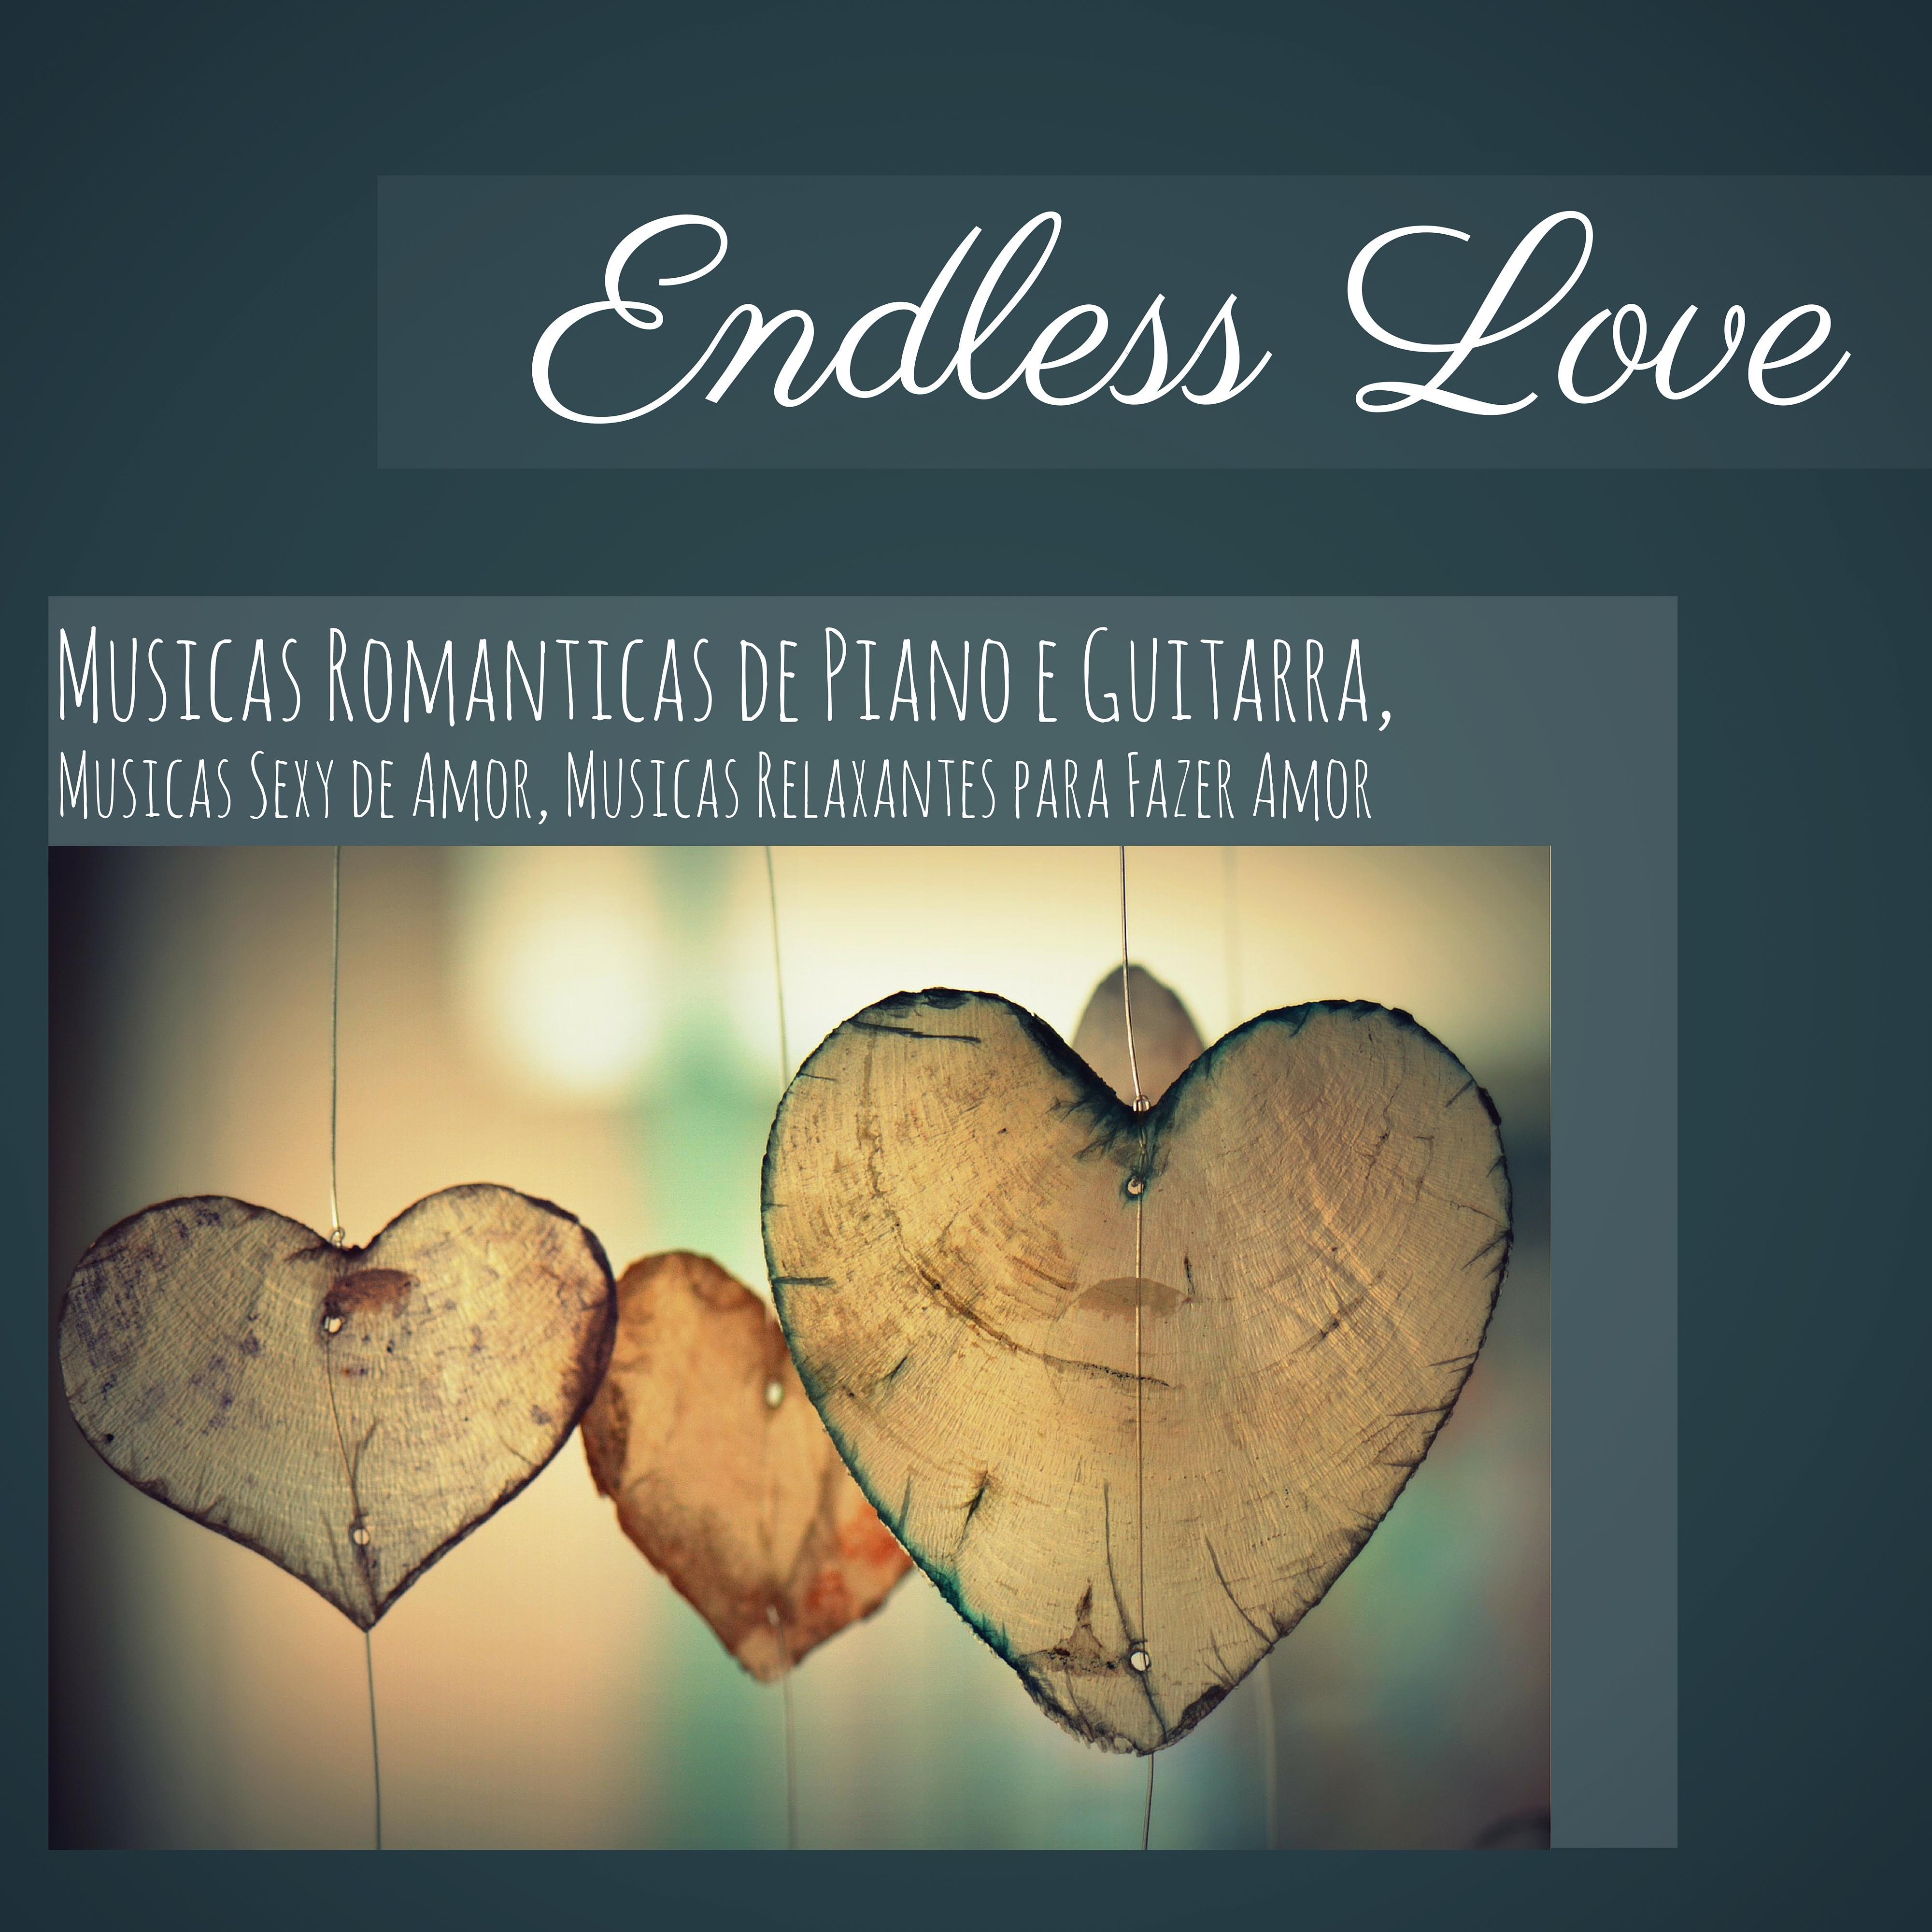 Endless Love - Musica Romantica